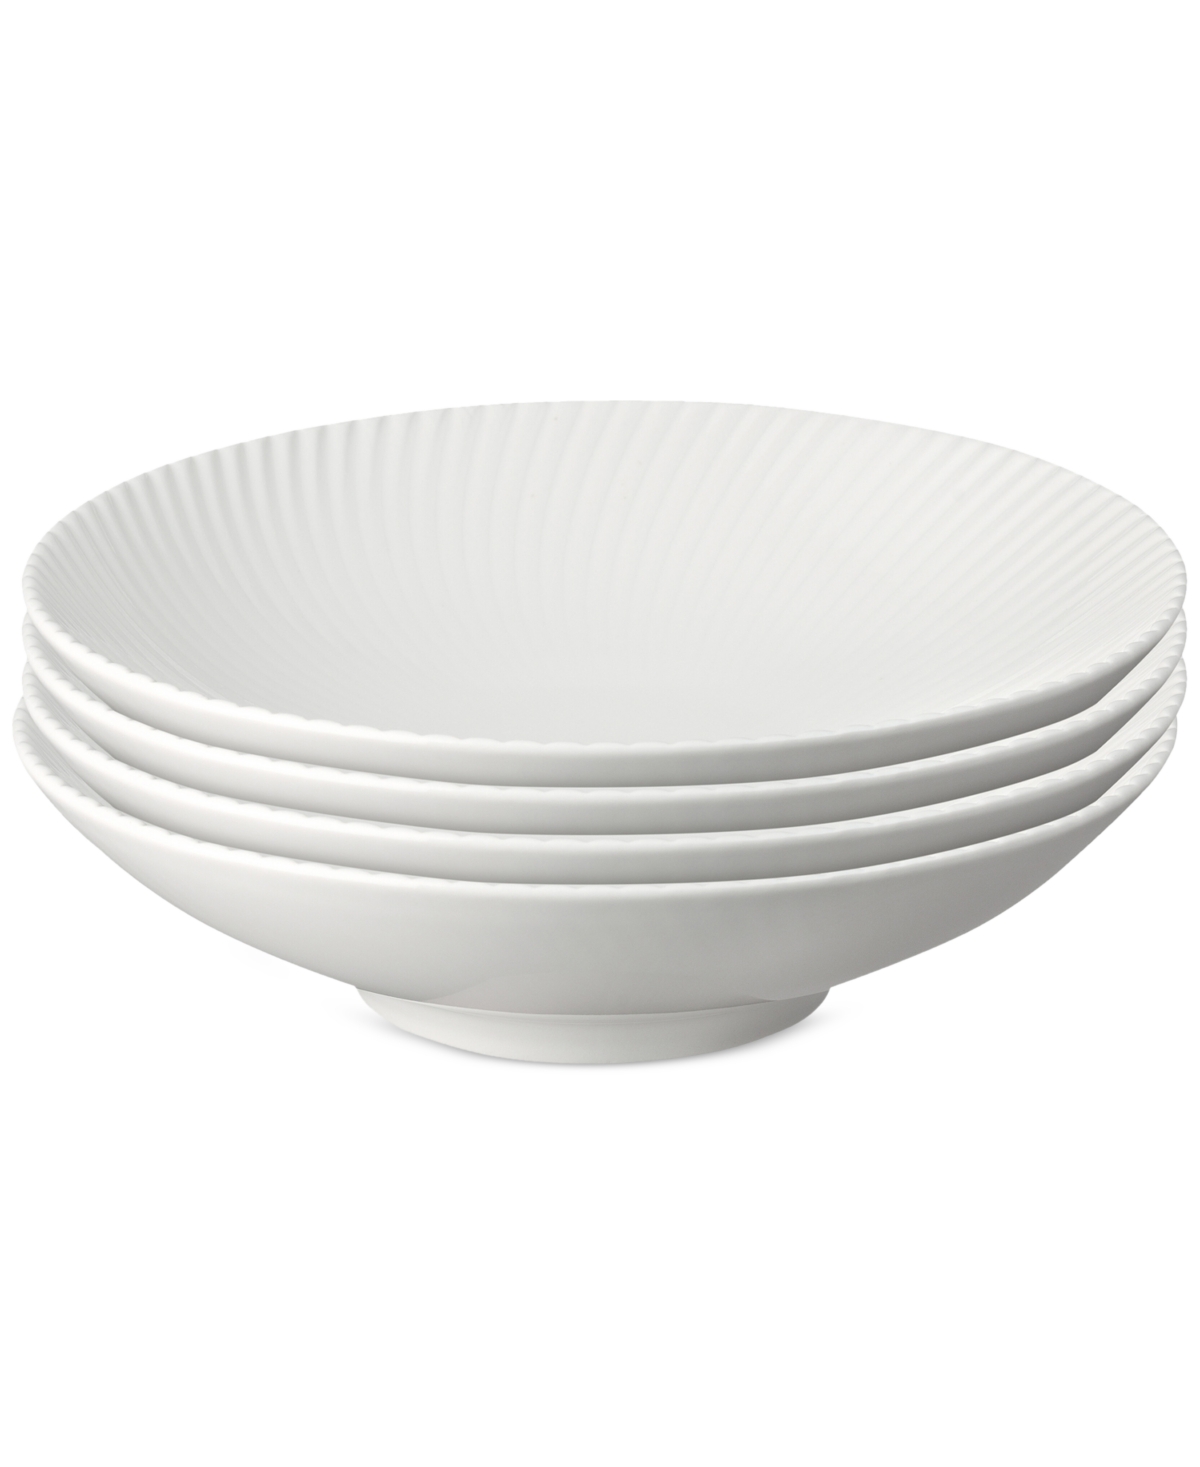 Arc Collection Porcelain Pasta Bowls, Set of 4 - Light Grey